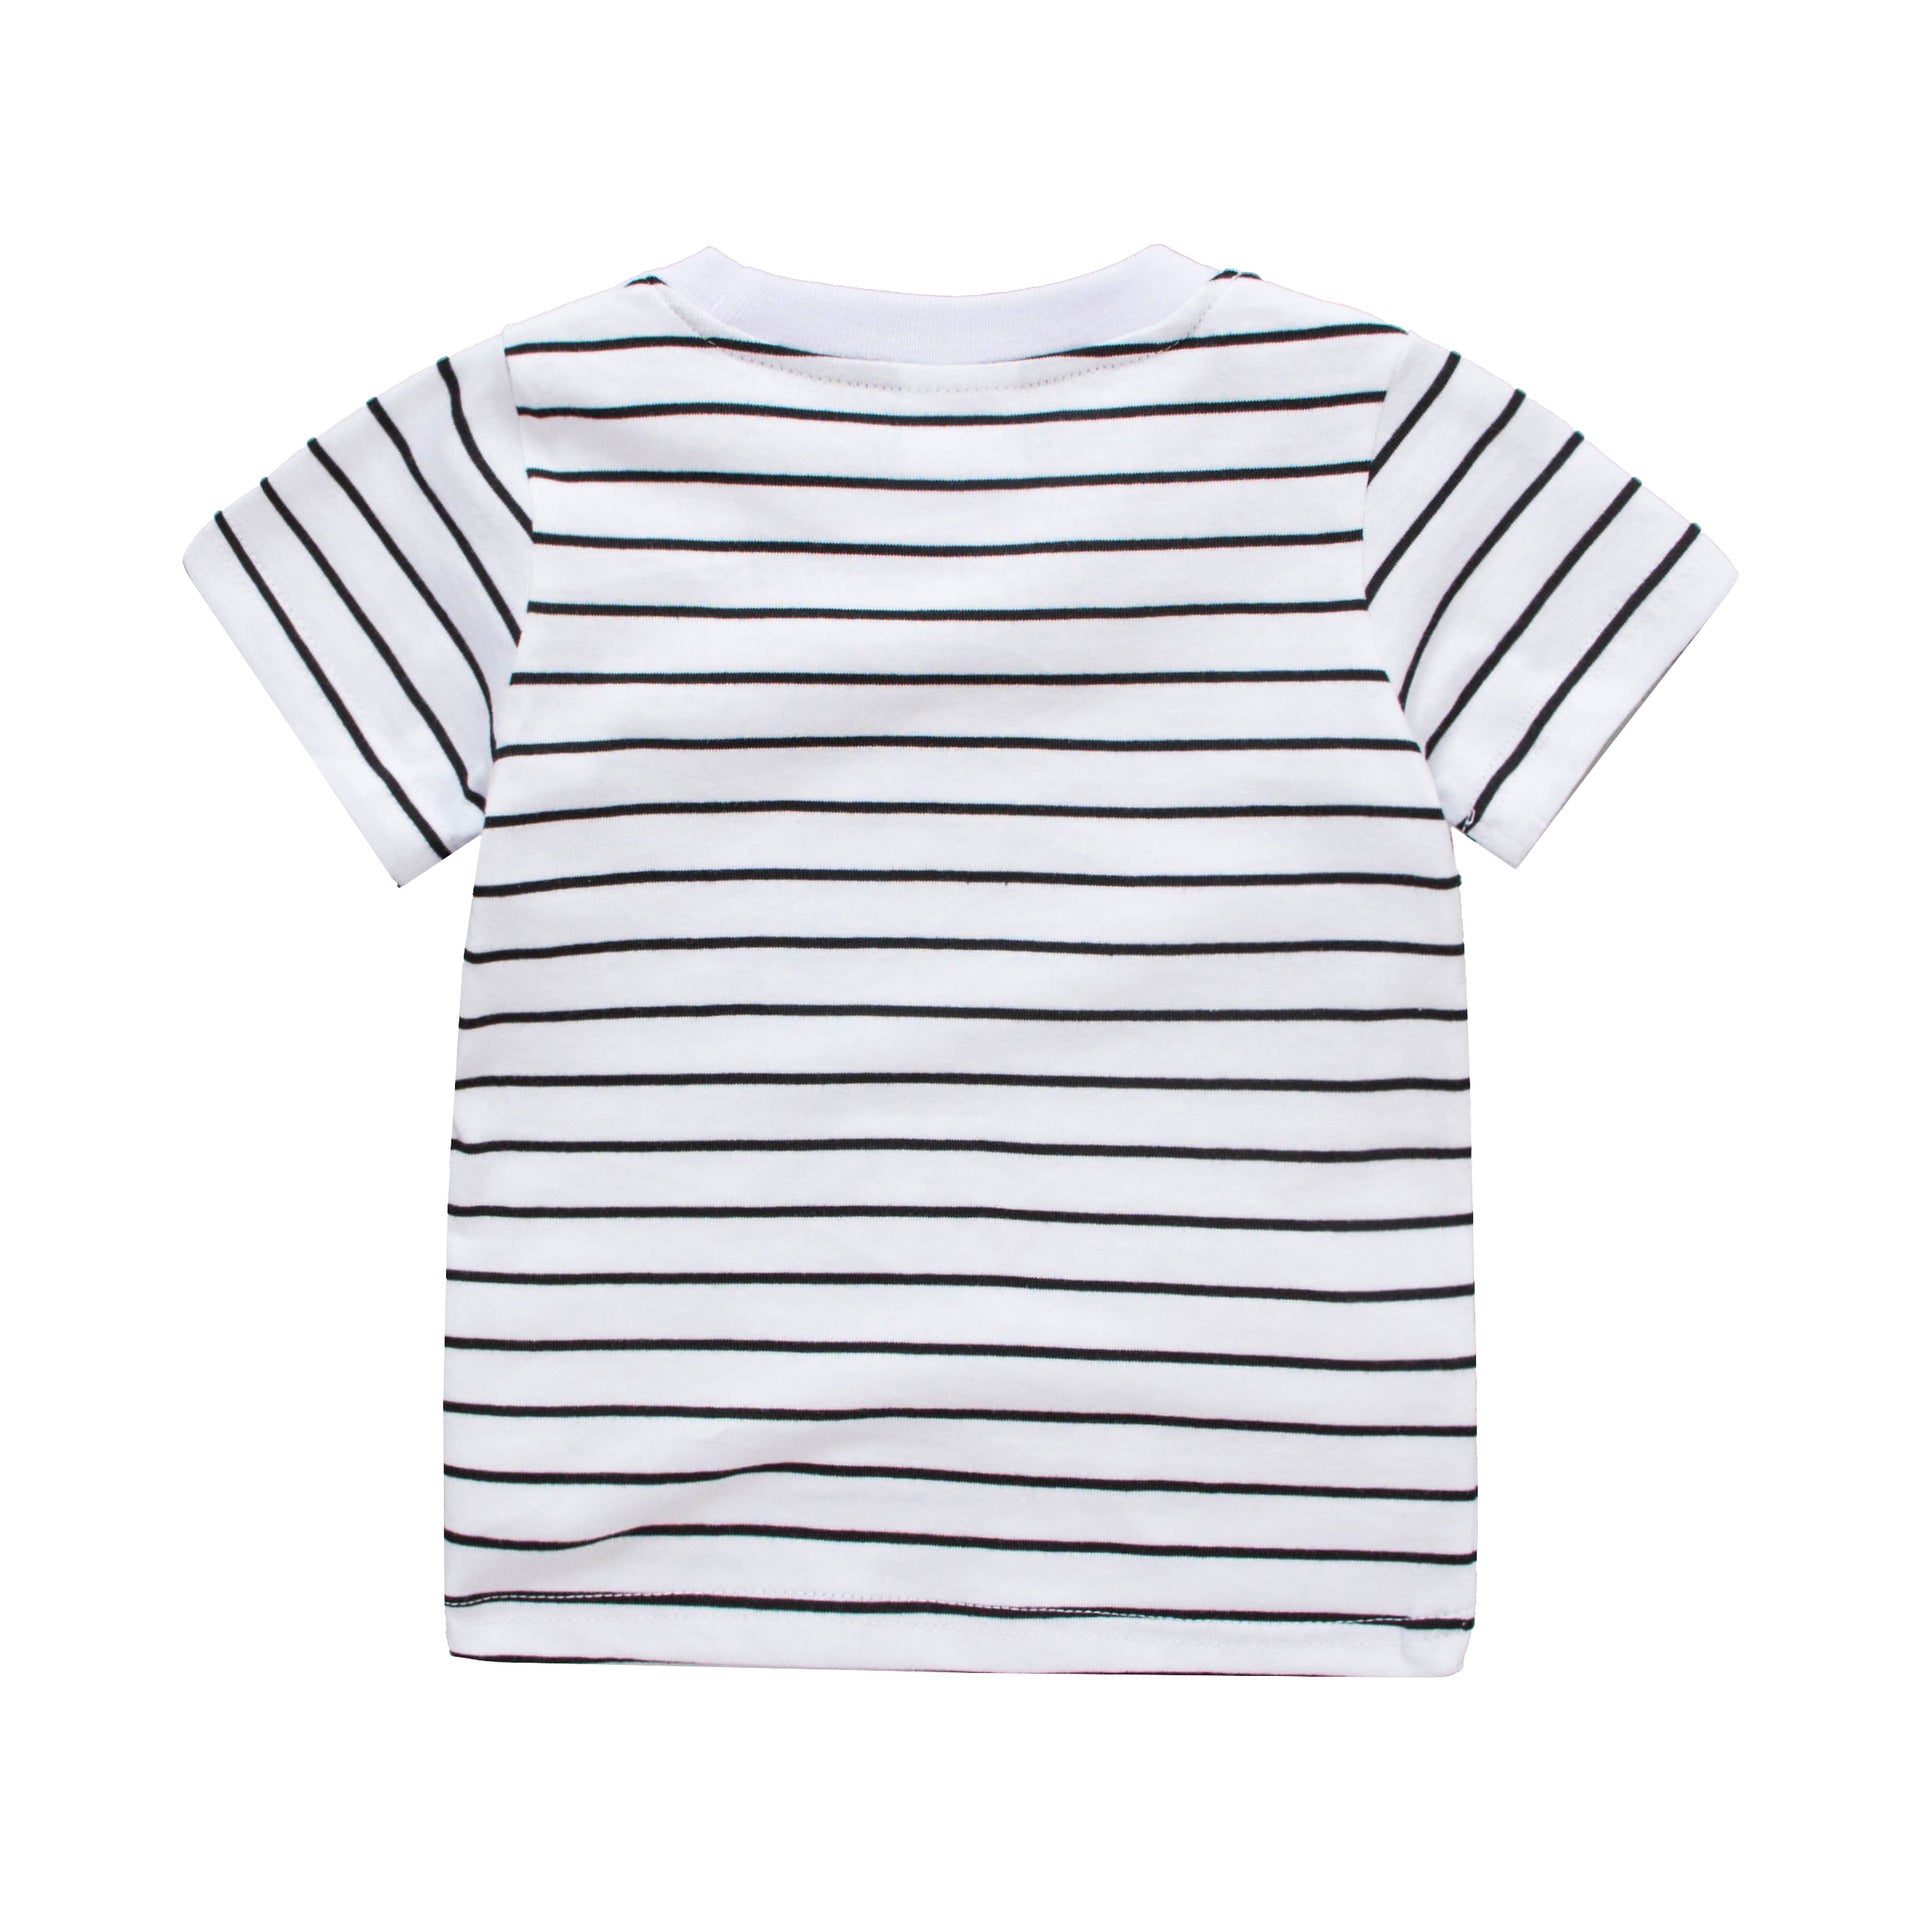 Striped Dinosaur Boys Short-sleeved T-shirt - Bambinos Boutique for boys